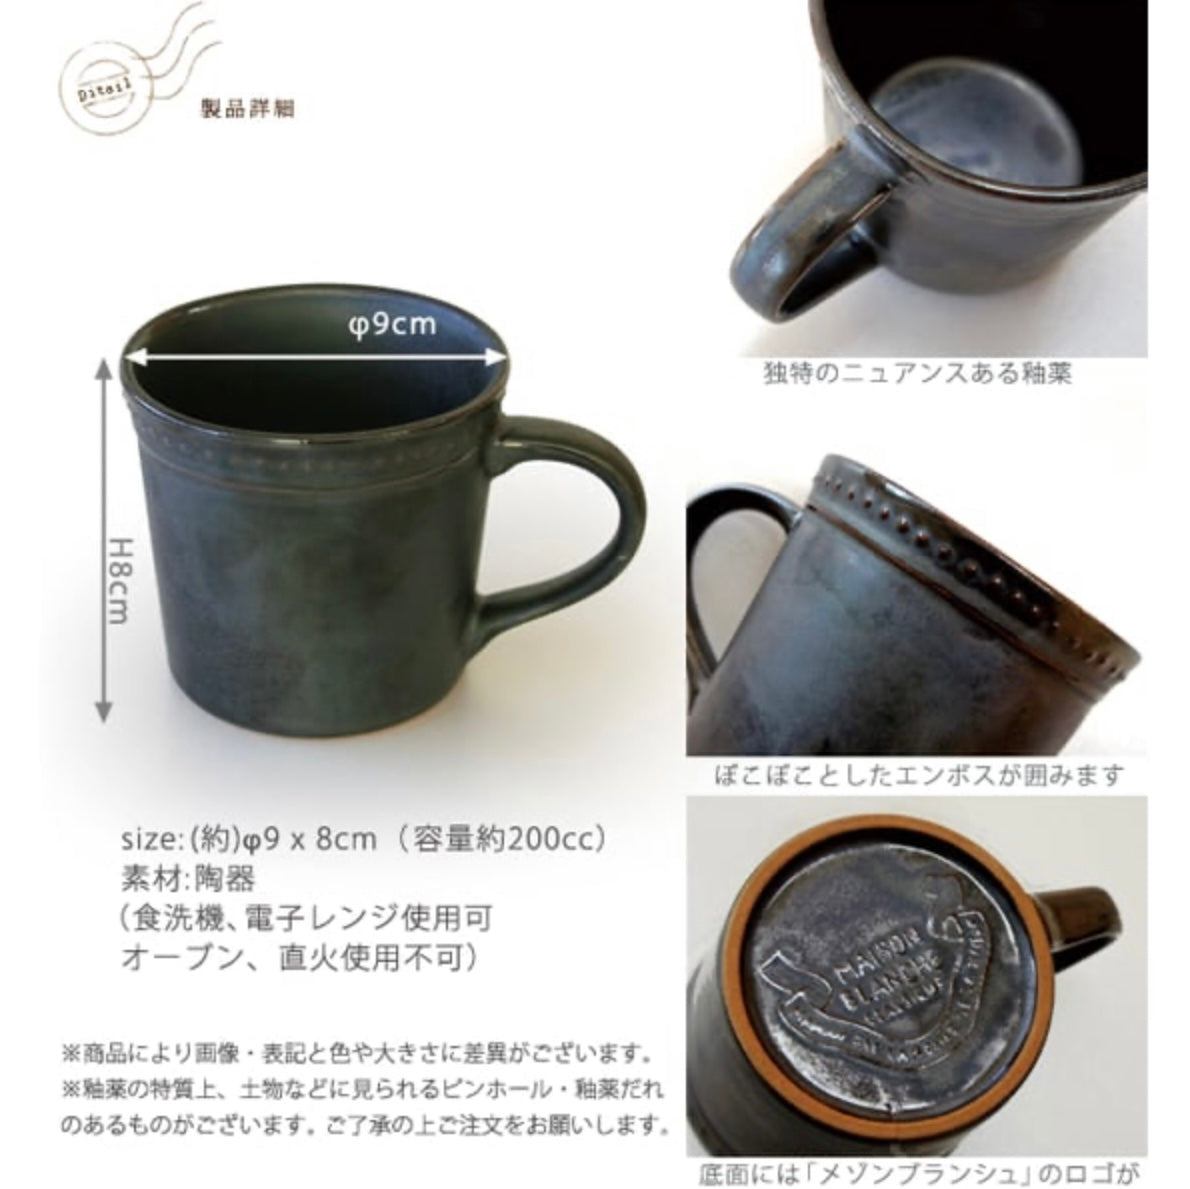 【Maison Blanche 】 La Reine Noir Mug Cup (Made in Japan)